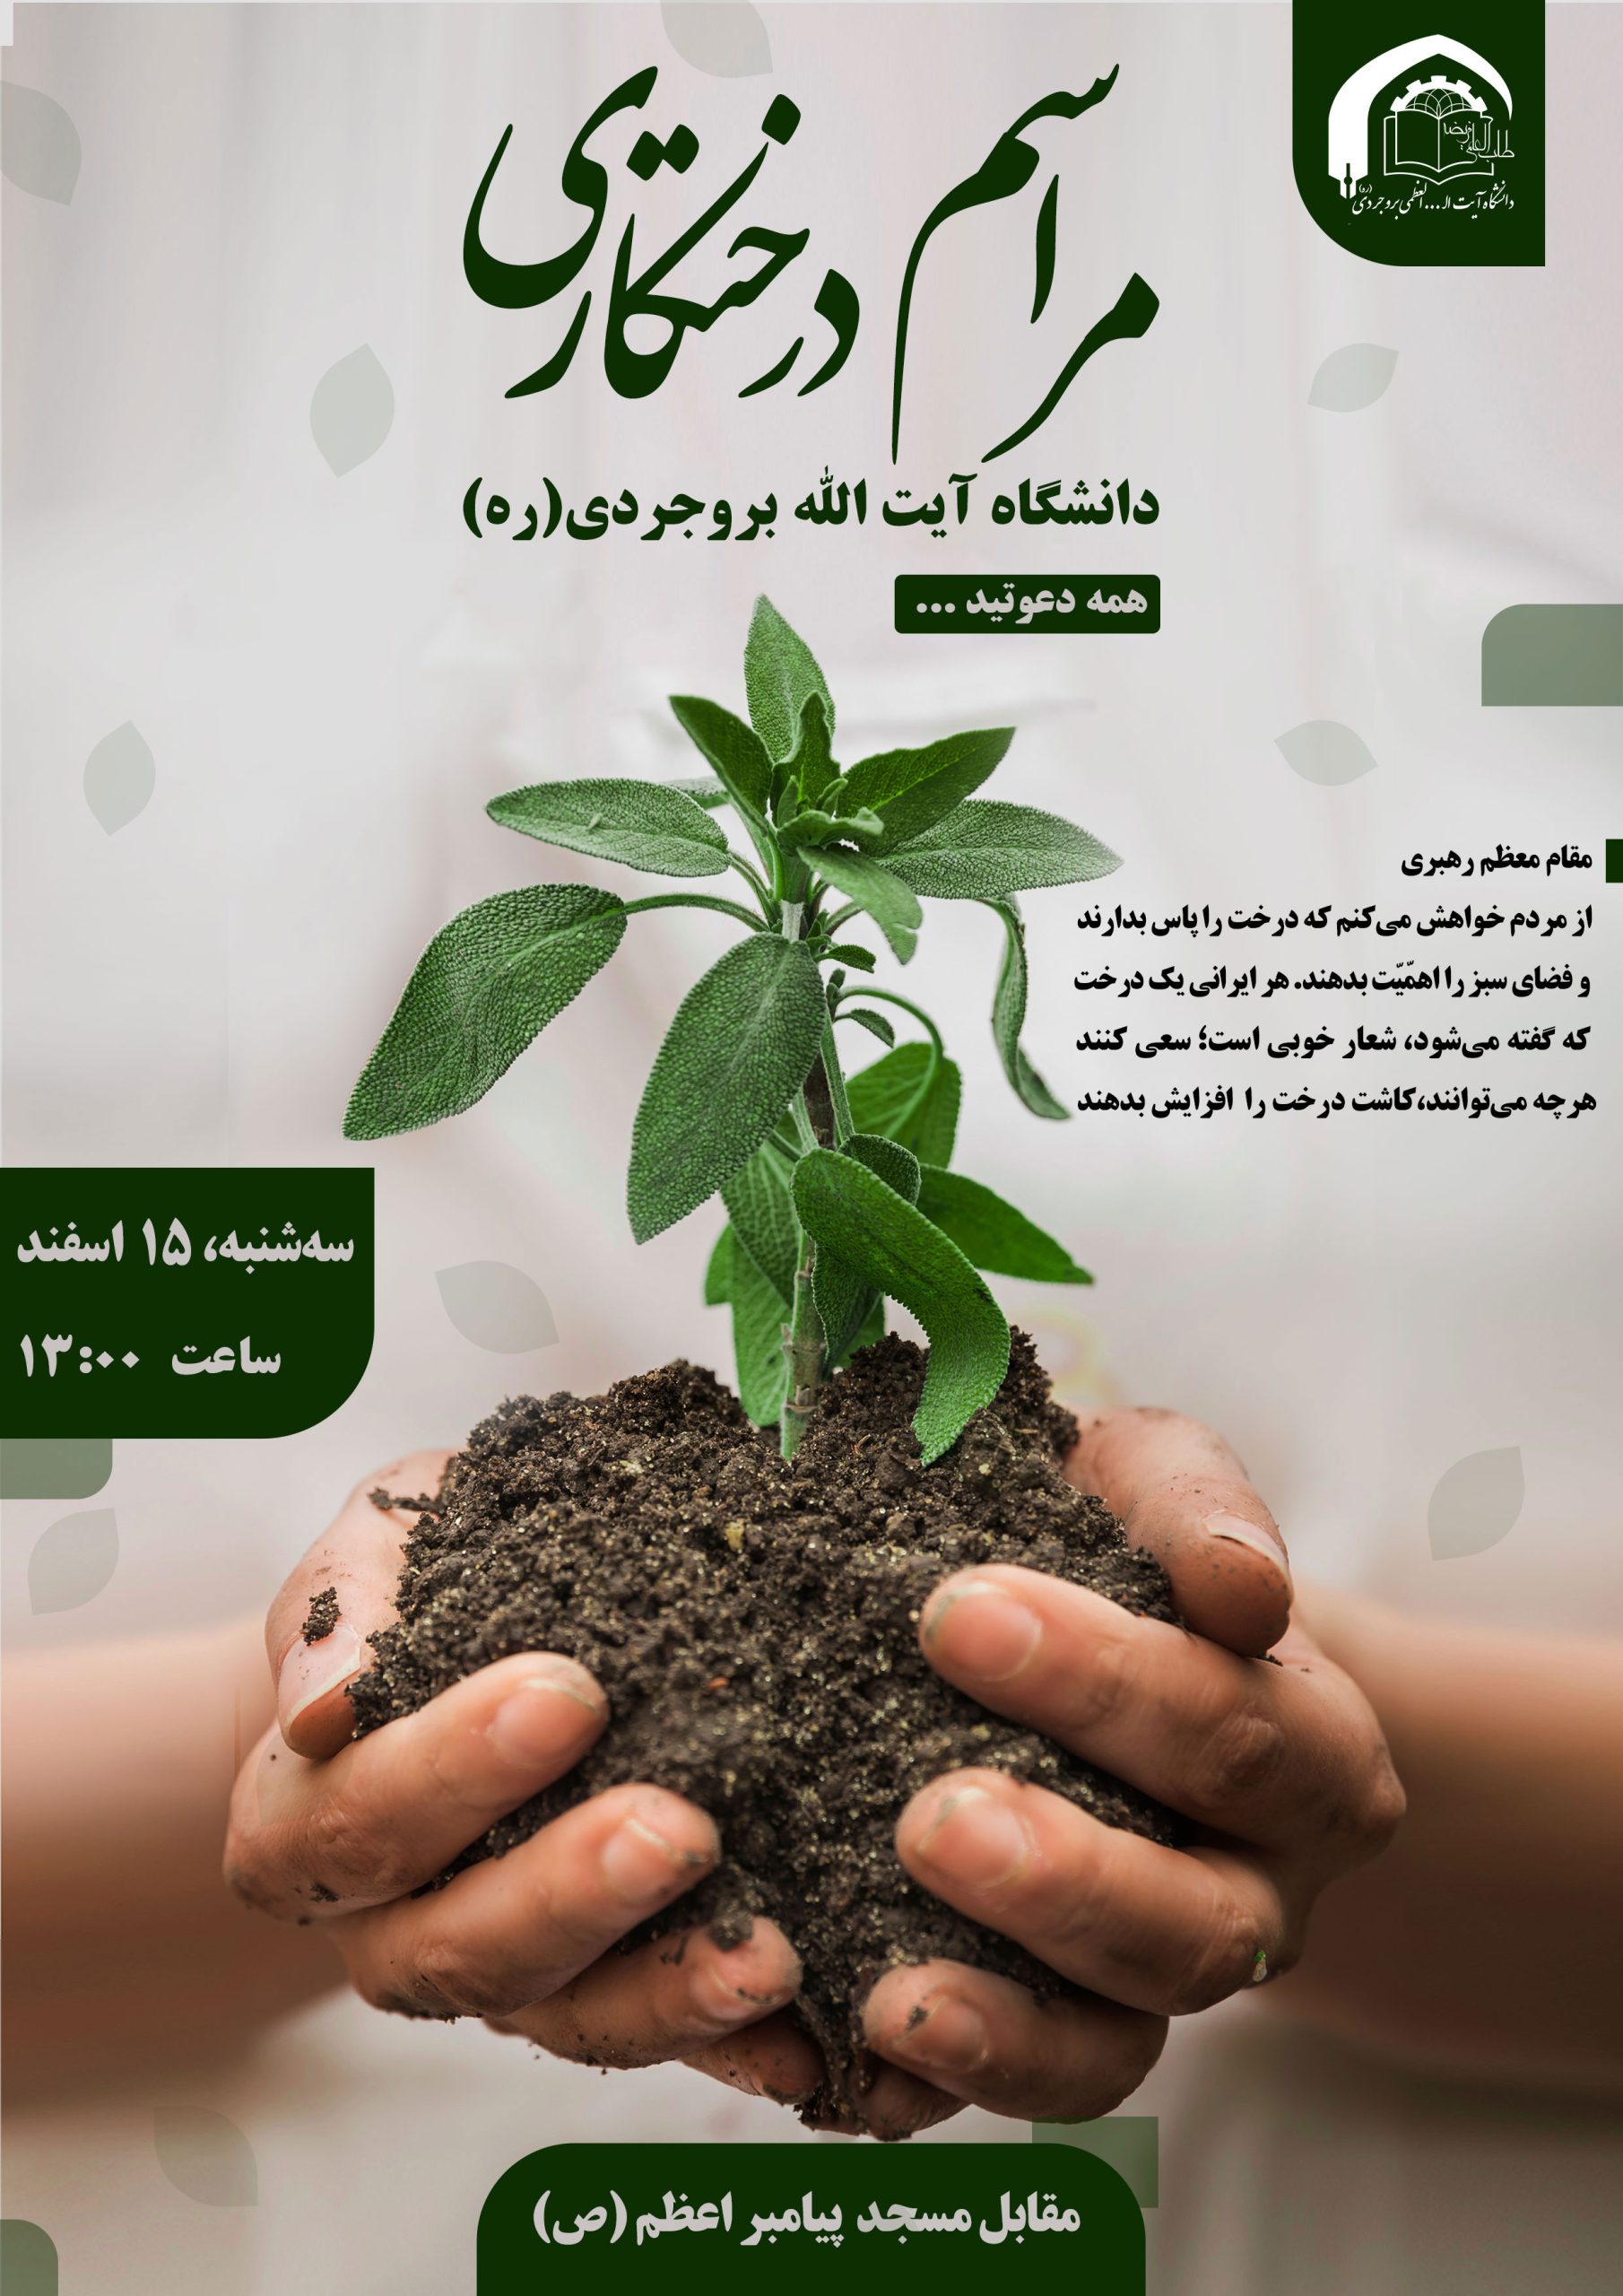 PublicRelations-Poster-PlantingTree-1